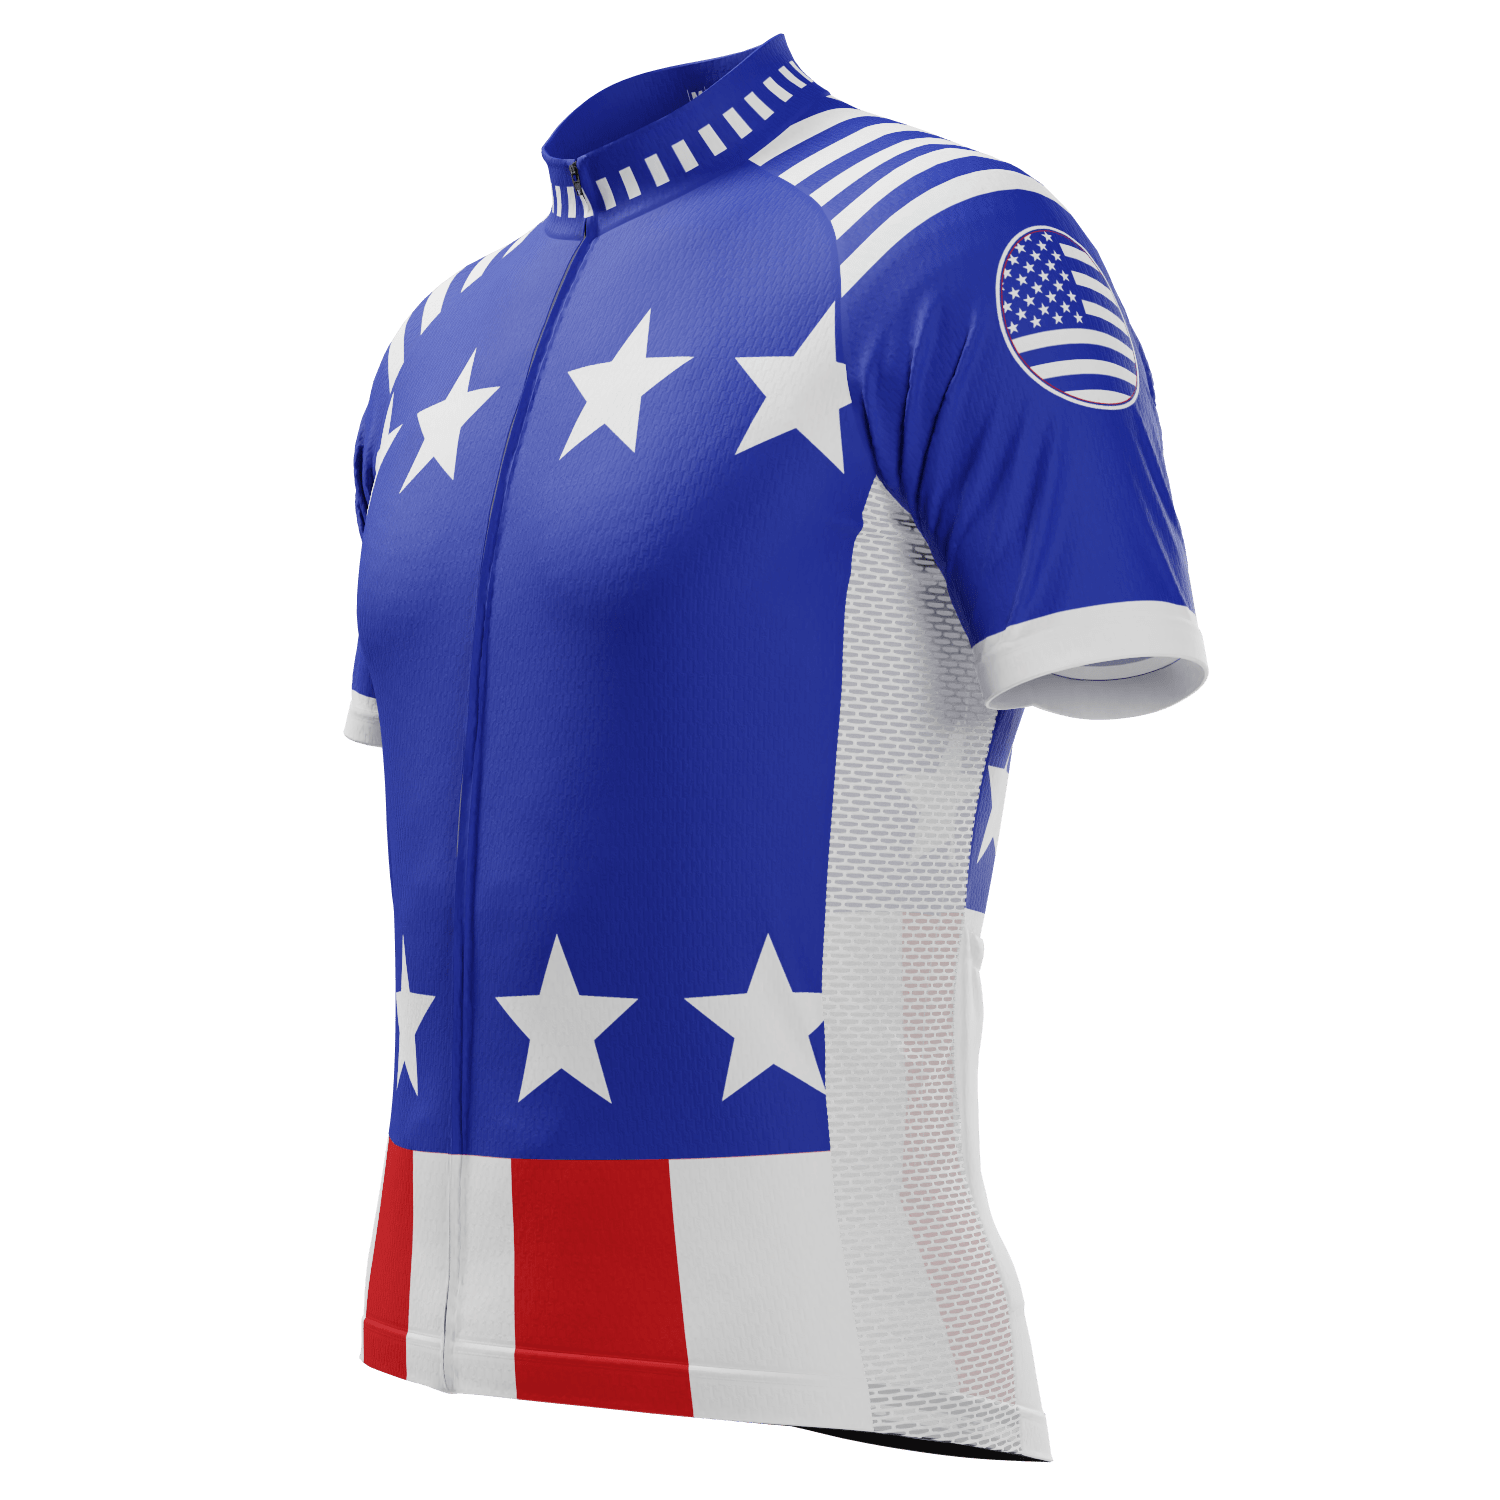 Men's Blue Americas Short Sleeve Cycling Jersey